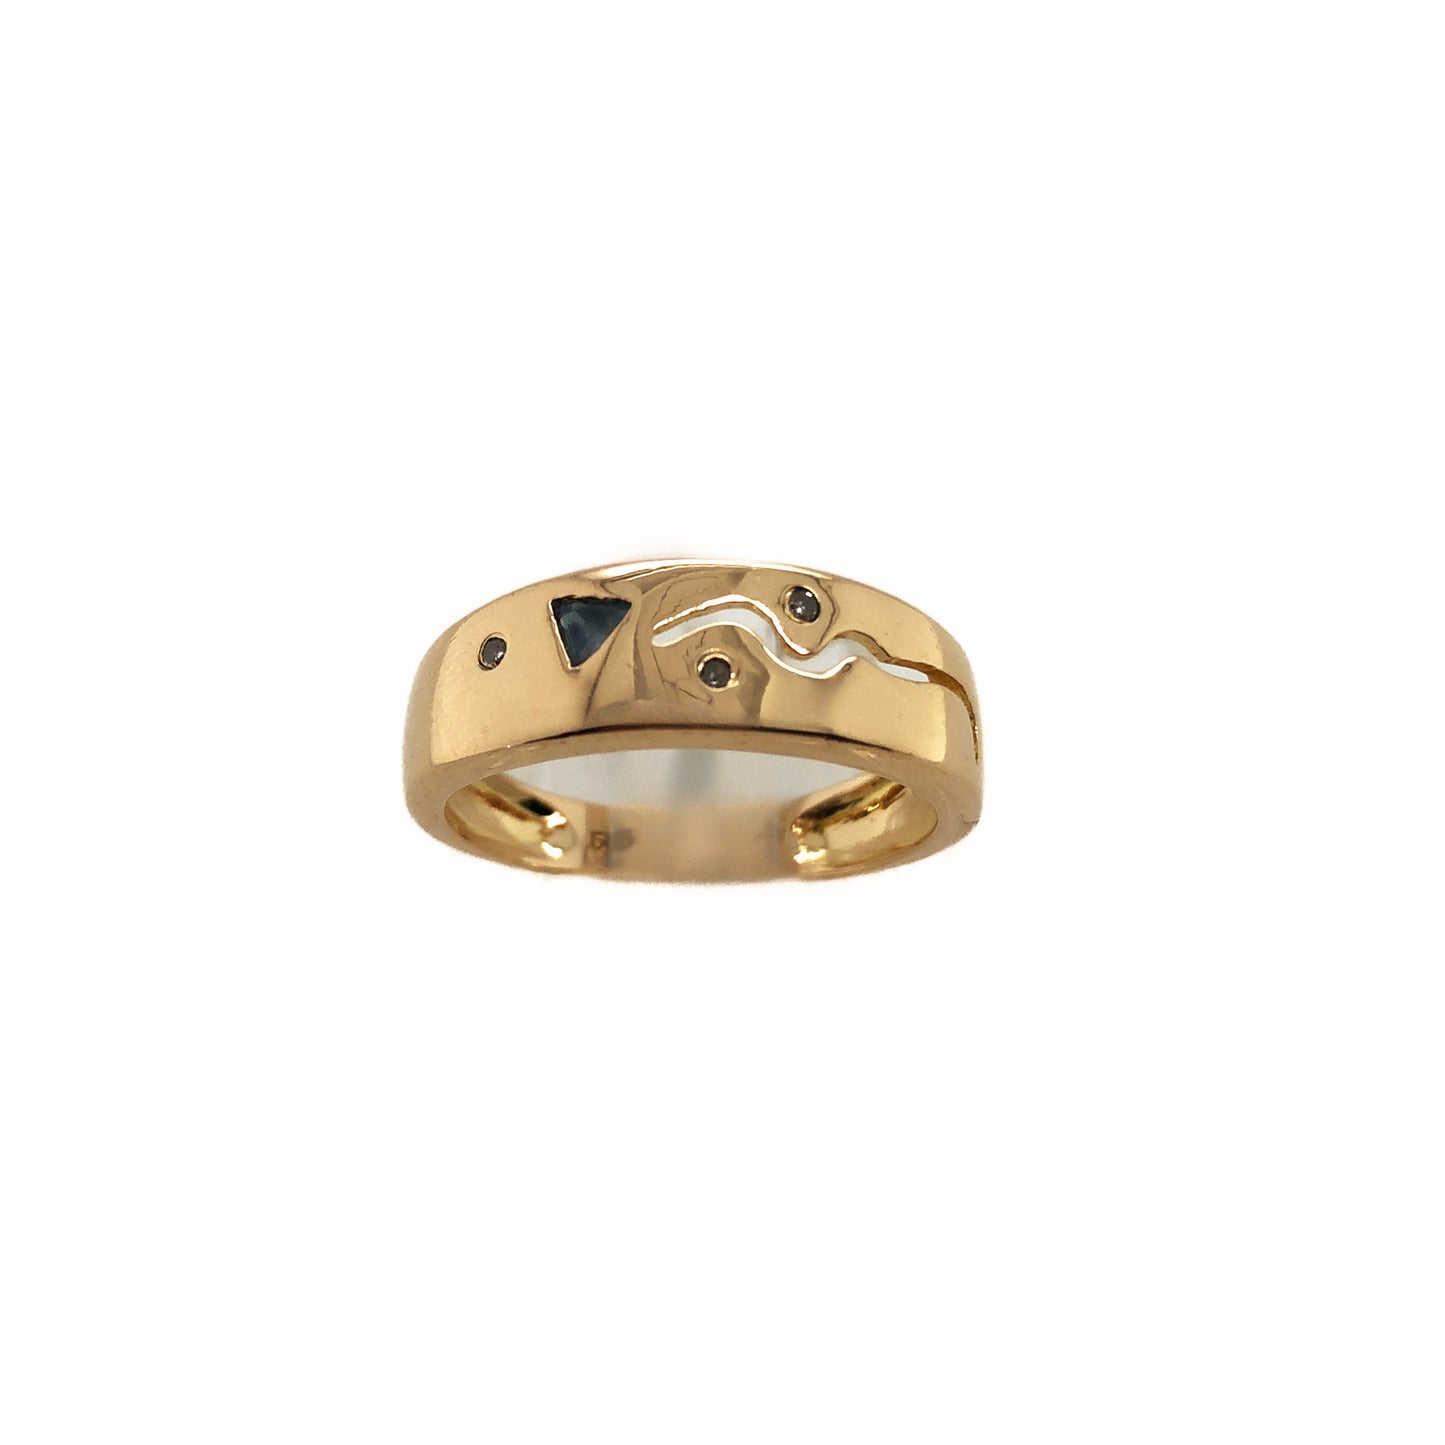 Ring Gold 585 / 14k Gr.56 , Bandring mit Steinen Nr. 3324